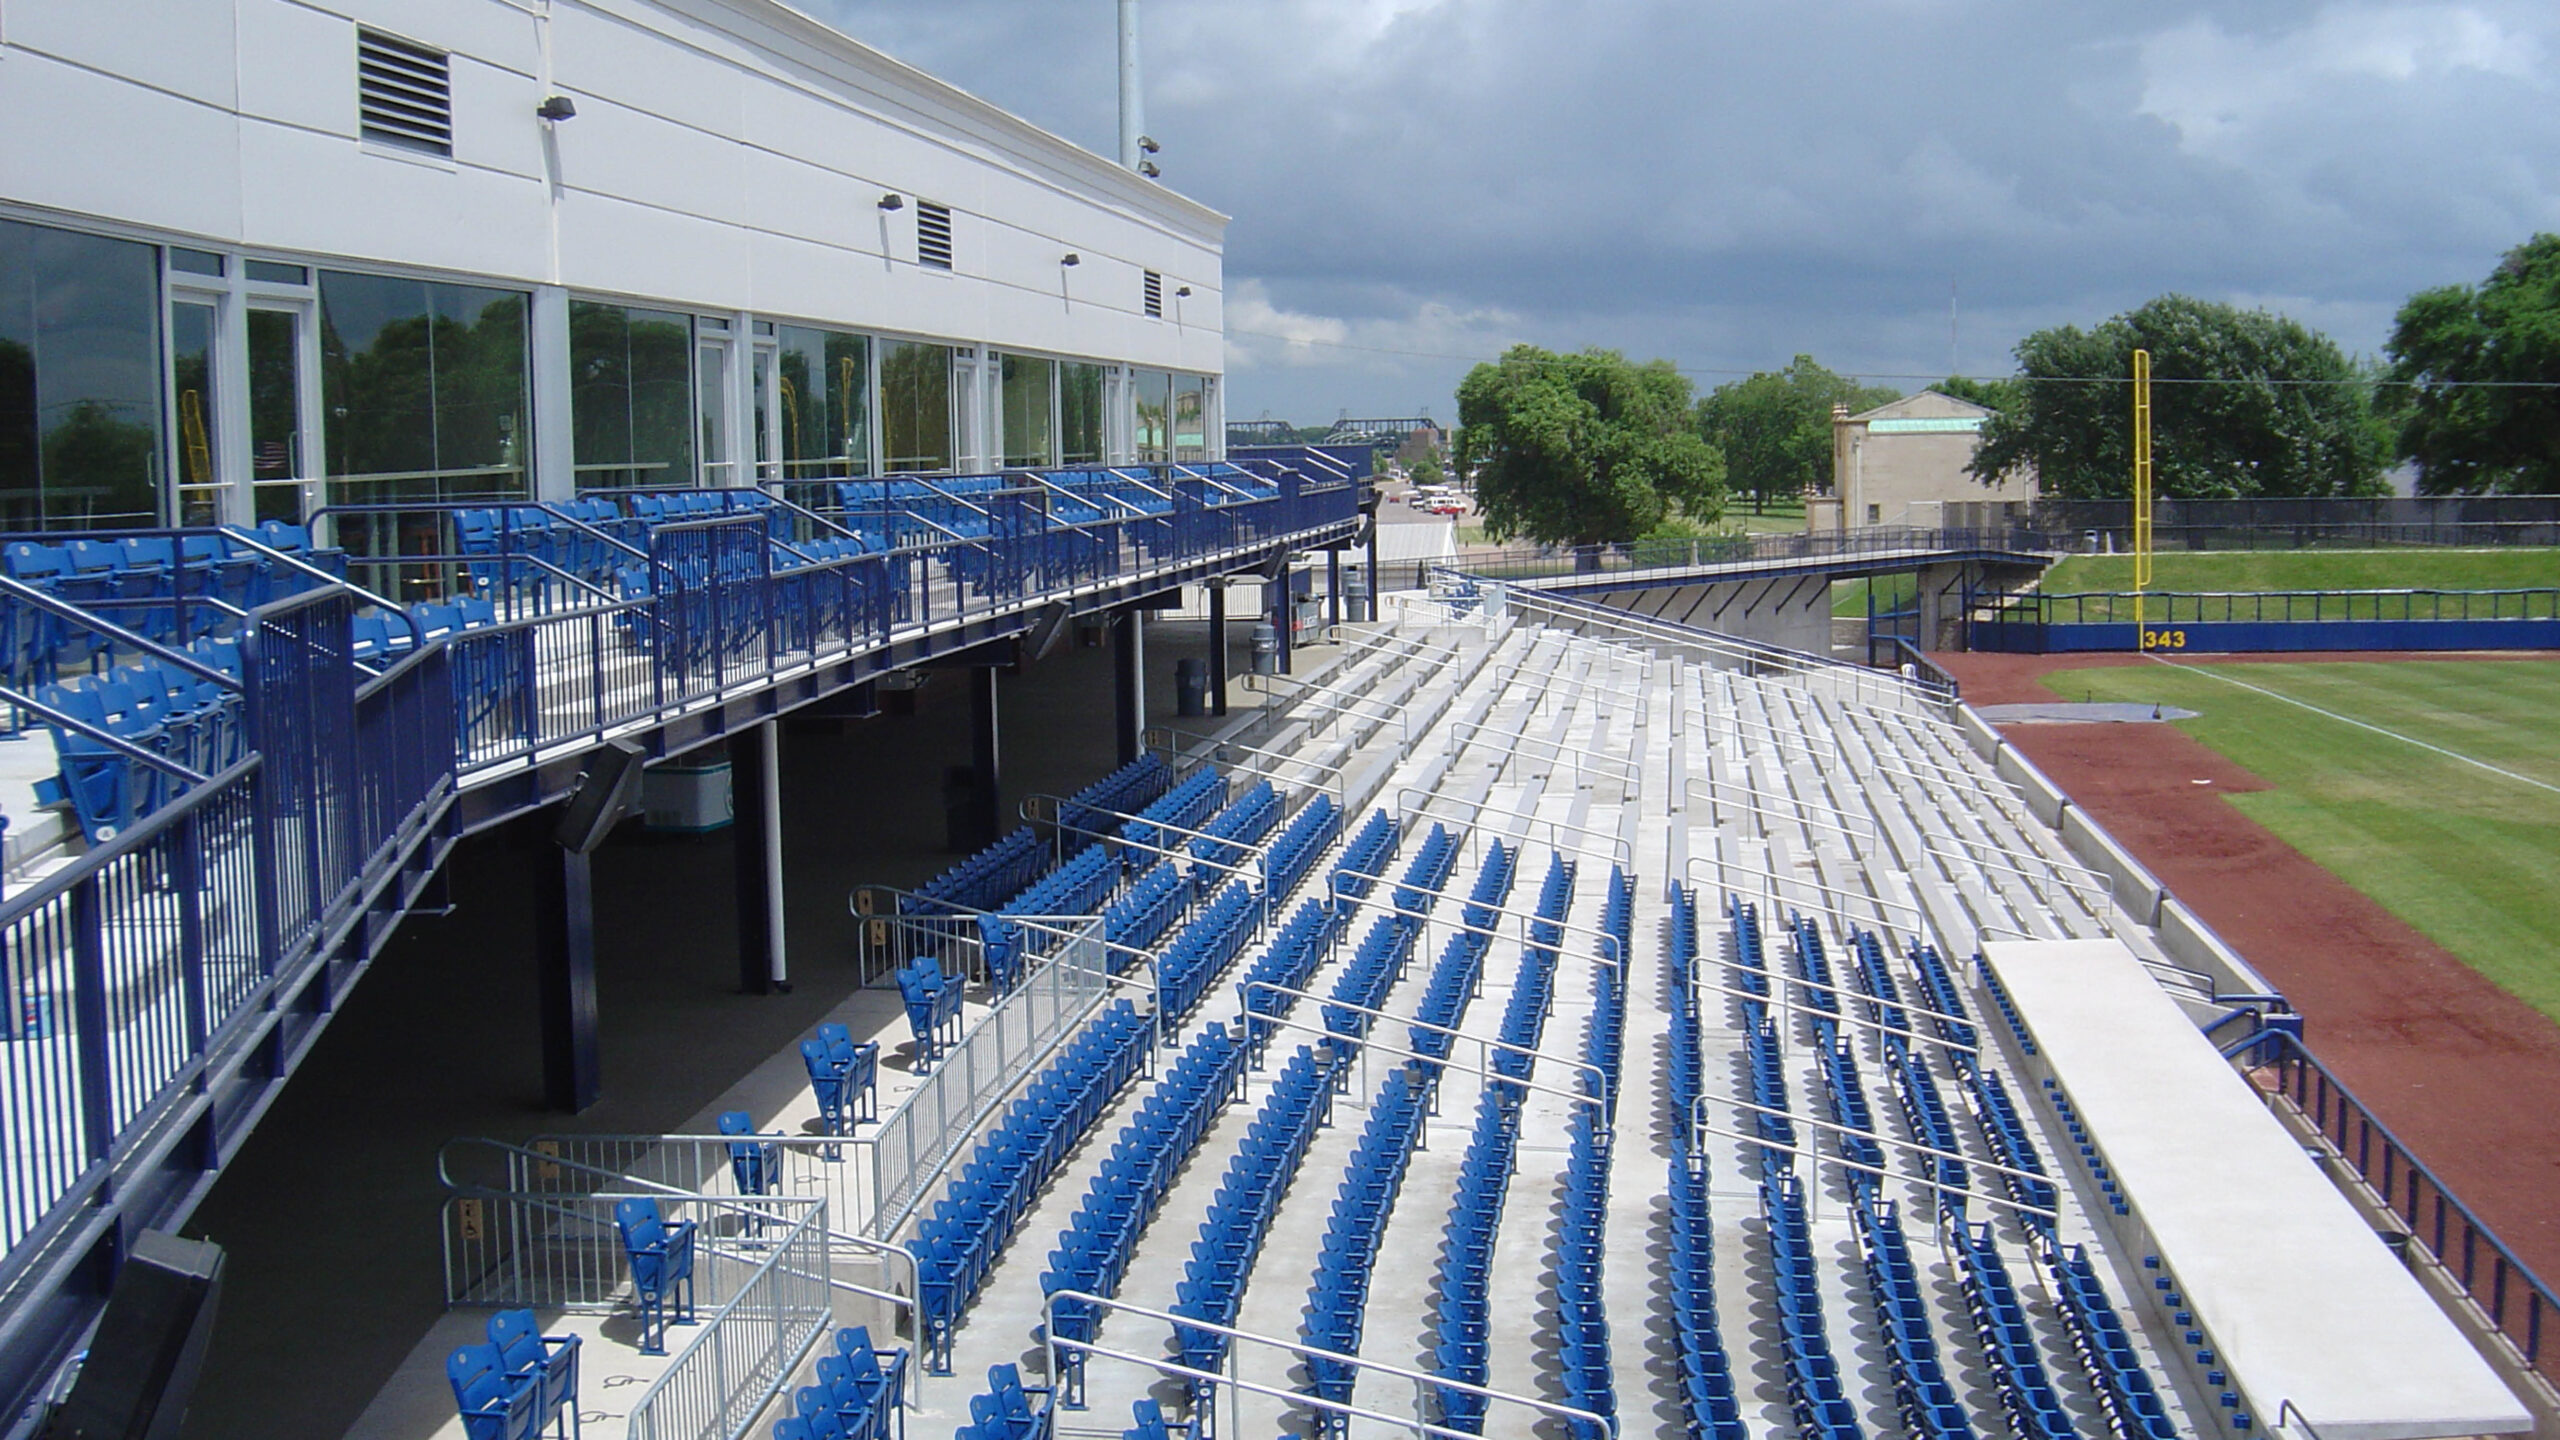 Stadium seating overlooking a baseball diamond